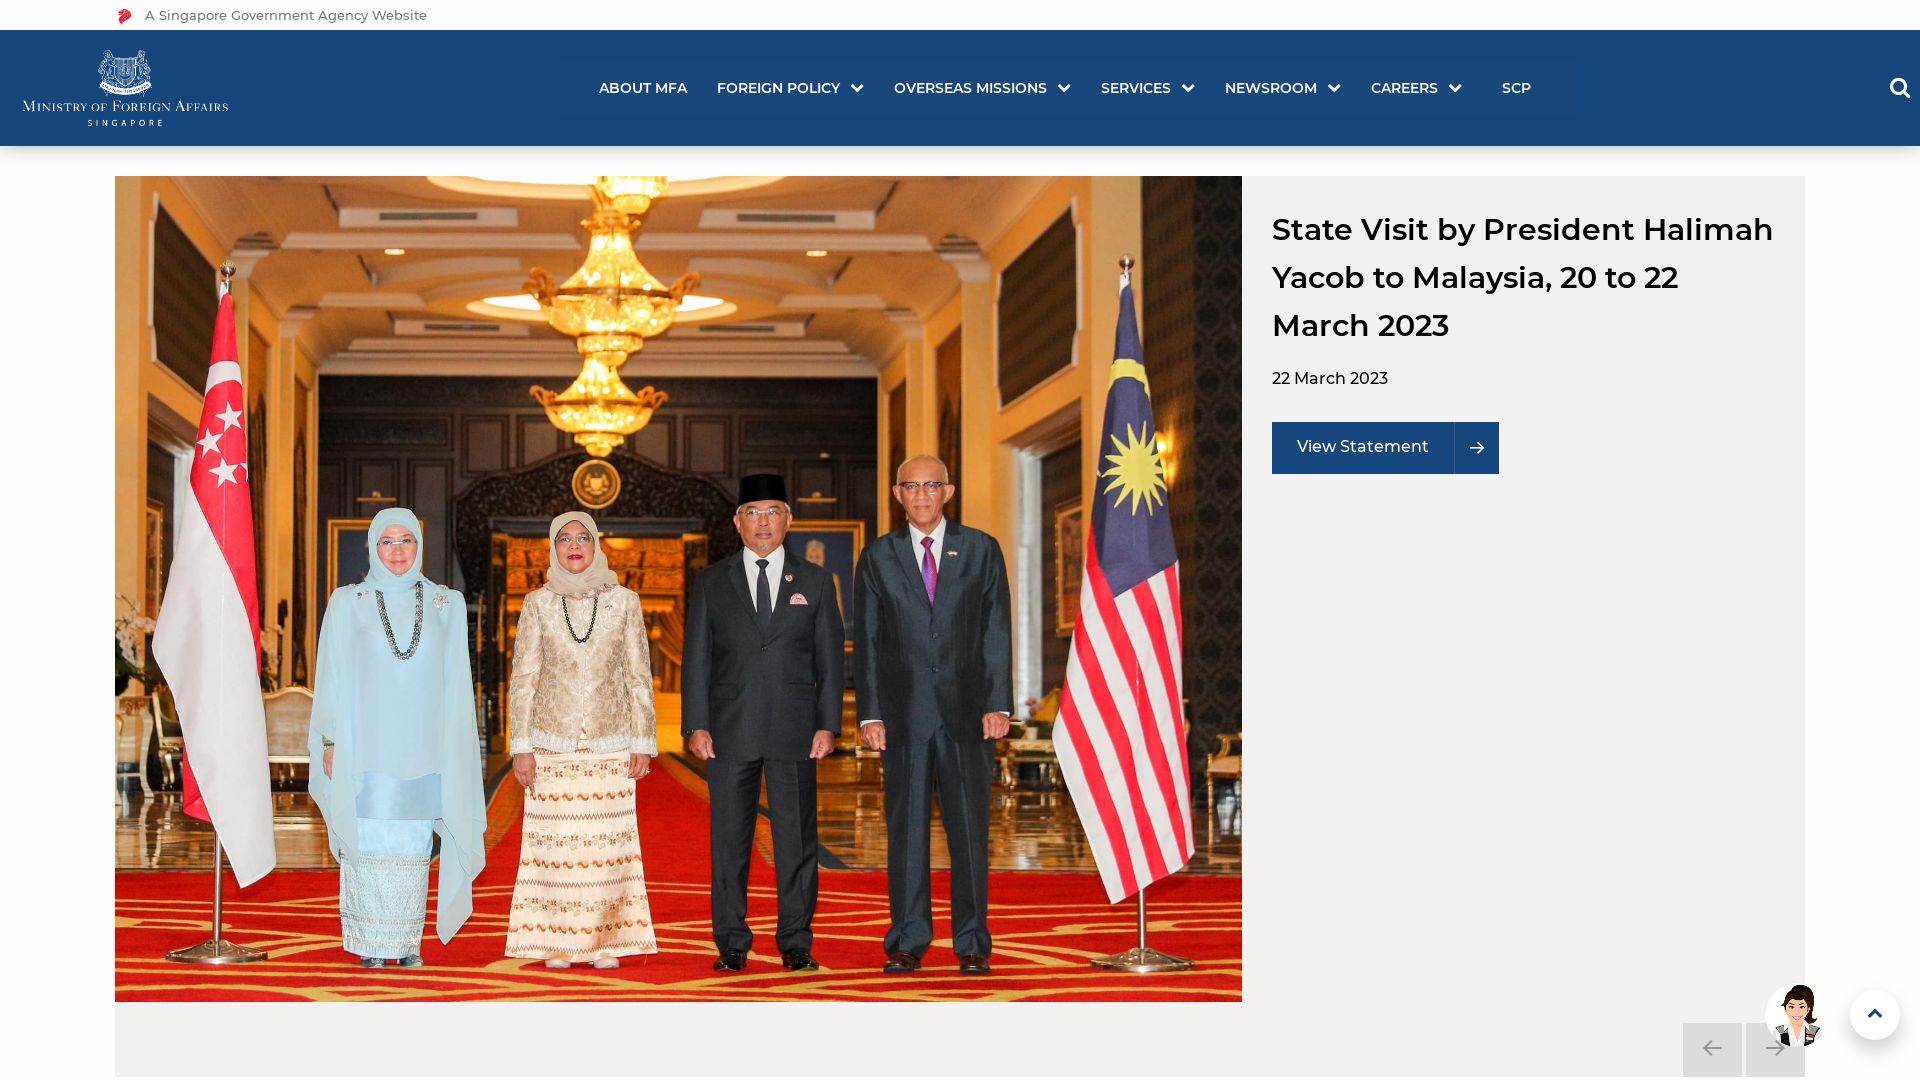 Website status mfa.gov.sg is   ONLINE